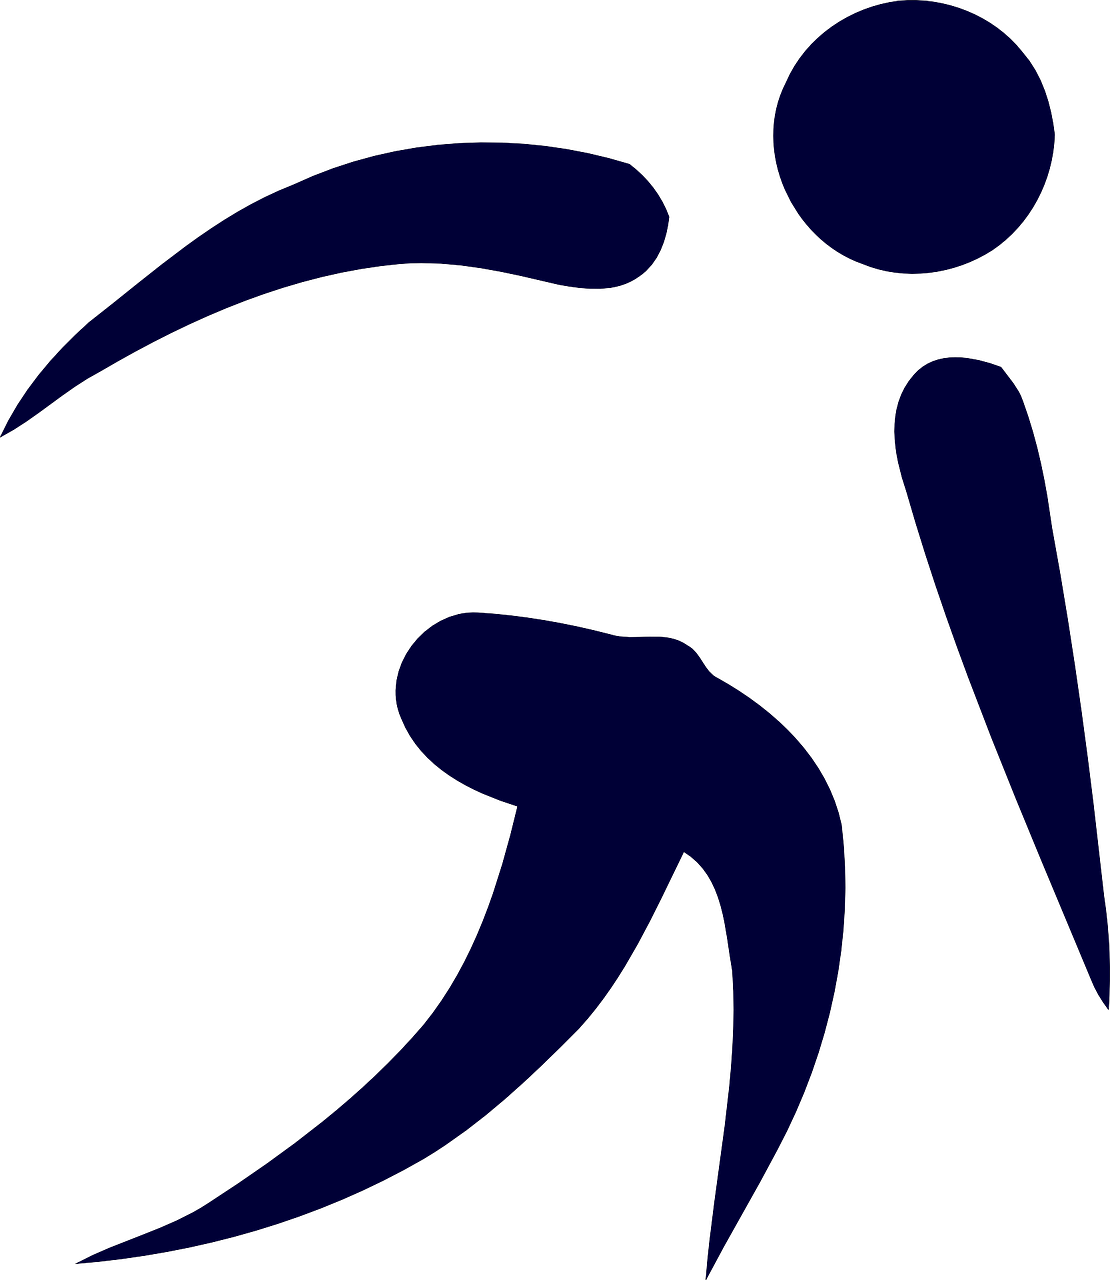 runner bowling pictogram free photo